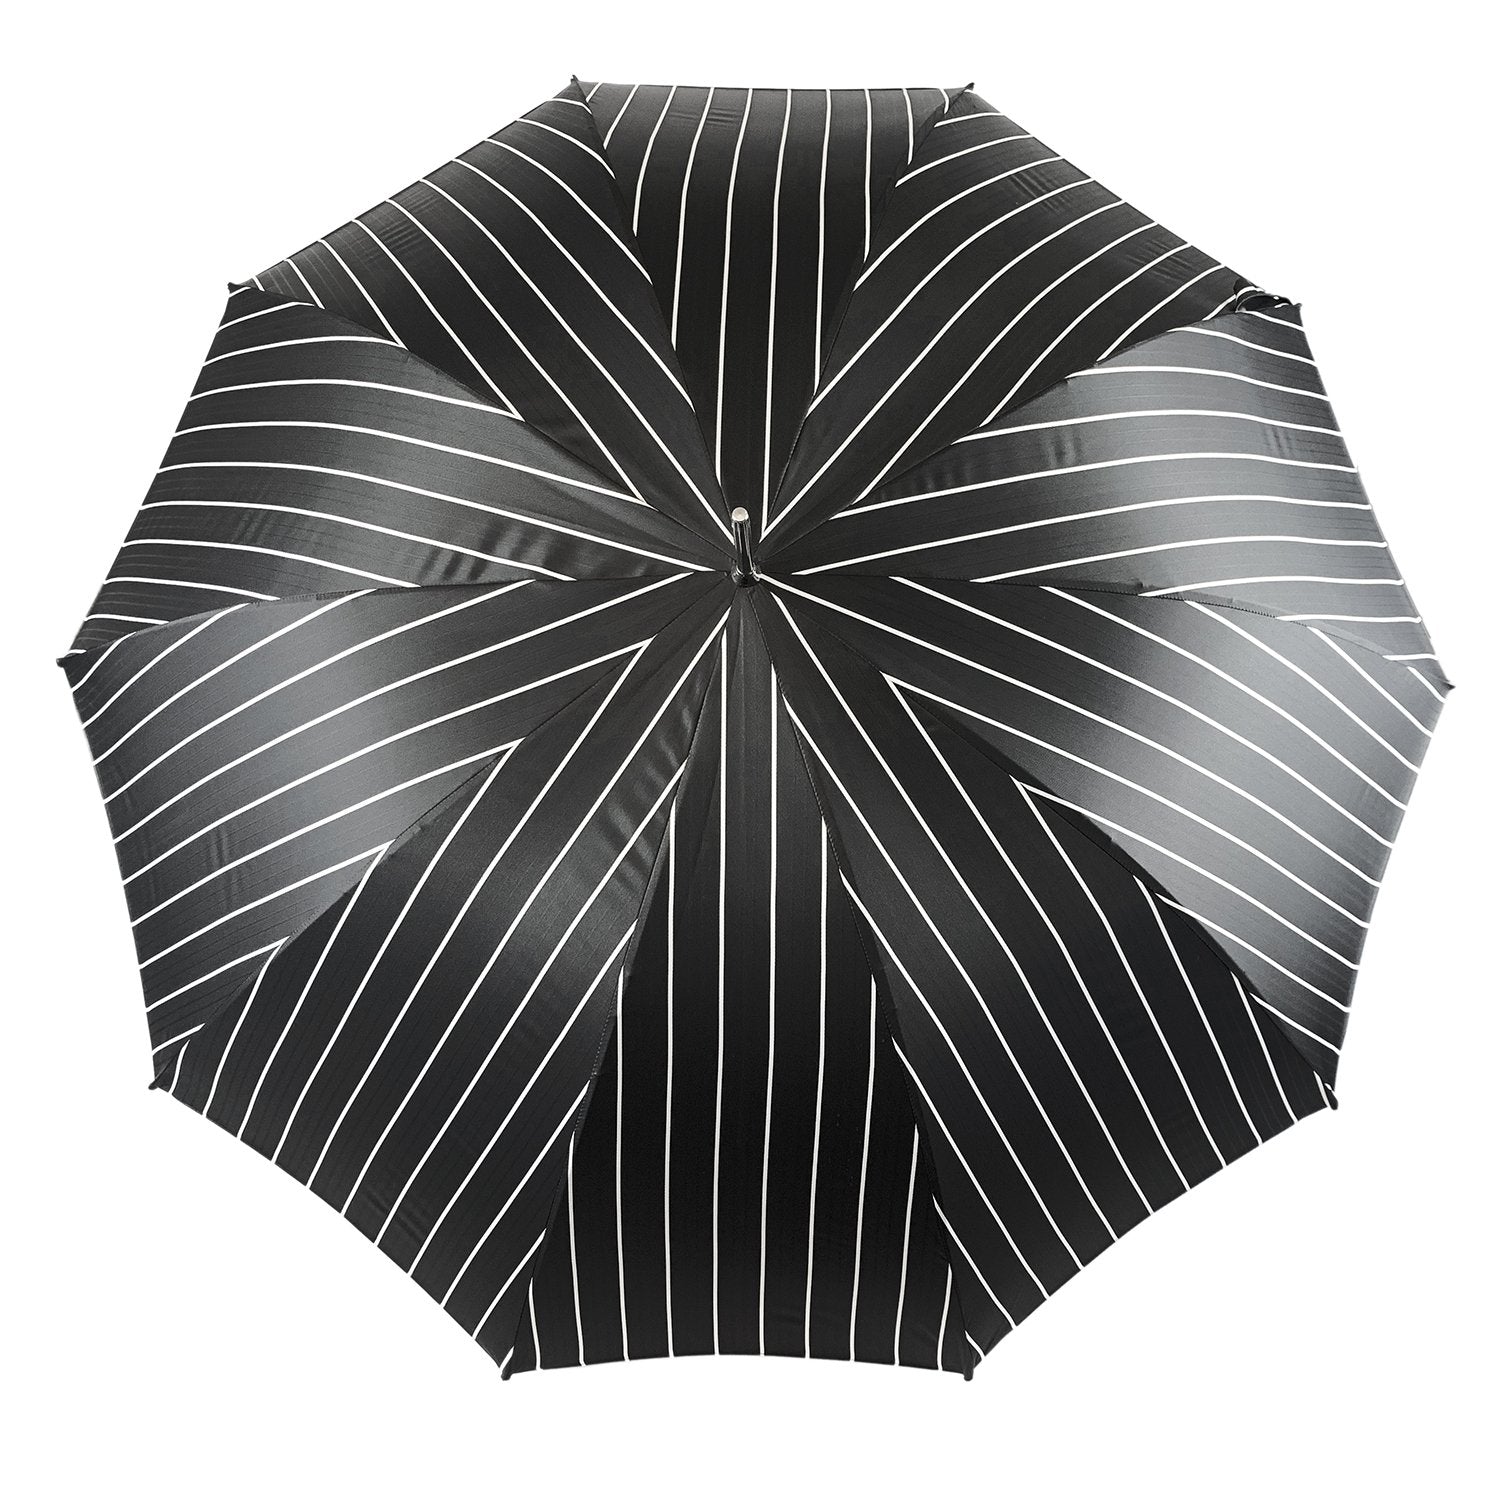 Smoke Gray with white stripes Umbrella - IL MARCHESATO LUXURY UMBRELLAS, CANES AND SHOEHORNS